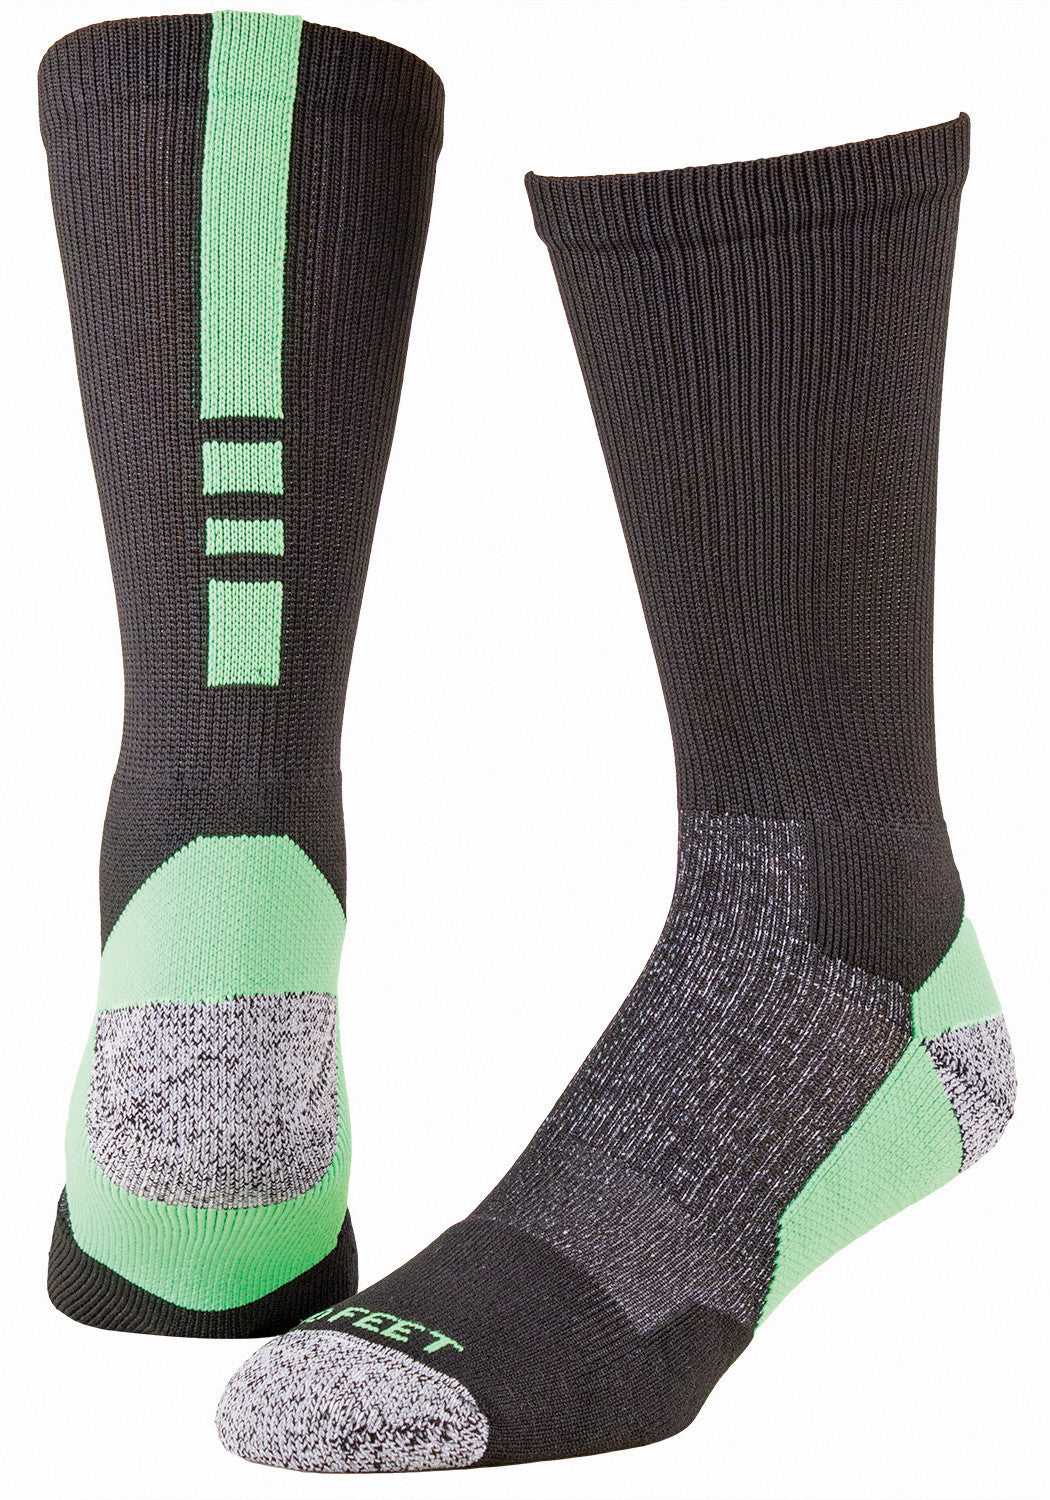 Pro Feet 238 Pro Feet Performance Shooter 2.0 Socks - Black Neon Green - HIT a Double